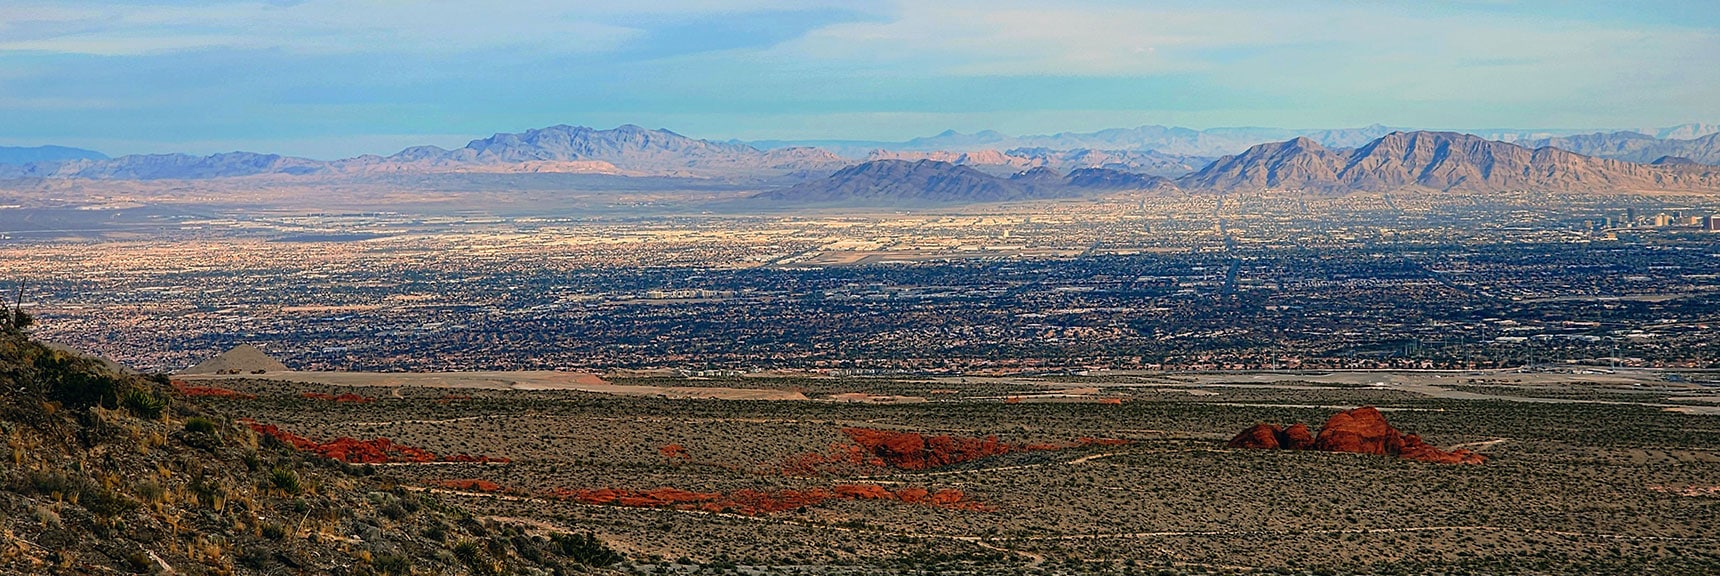 Right to Left: Frenchman Mt., Sunrise Mt., Muddy Mts. Little Red Rock Below. | Damsel Peak Southeastern Slope | Calico & Brownstone Basins, Nevada